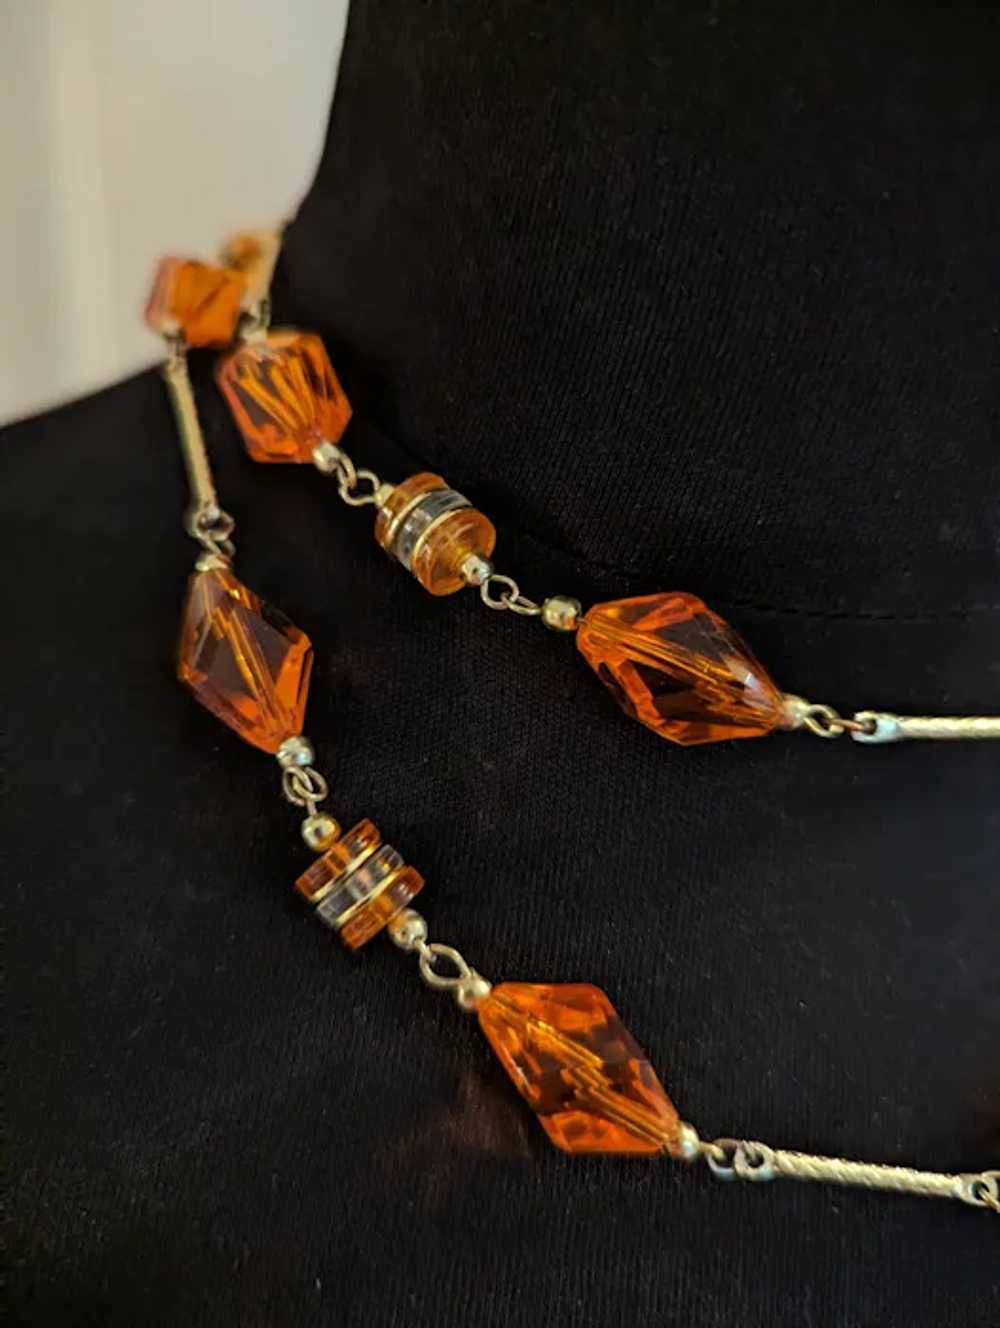 Translucent Orange Lucite Beads Necklace - image 4